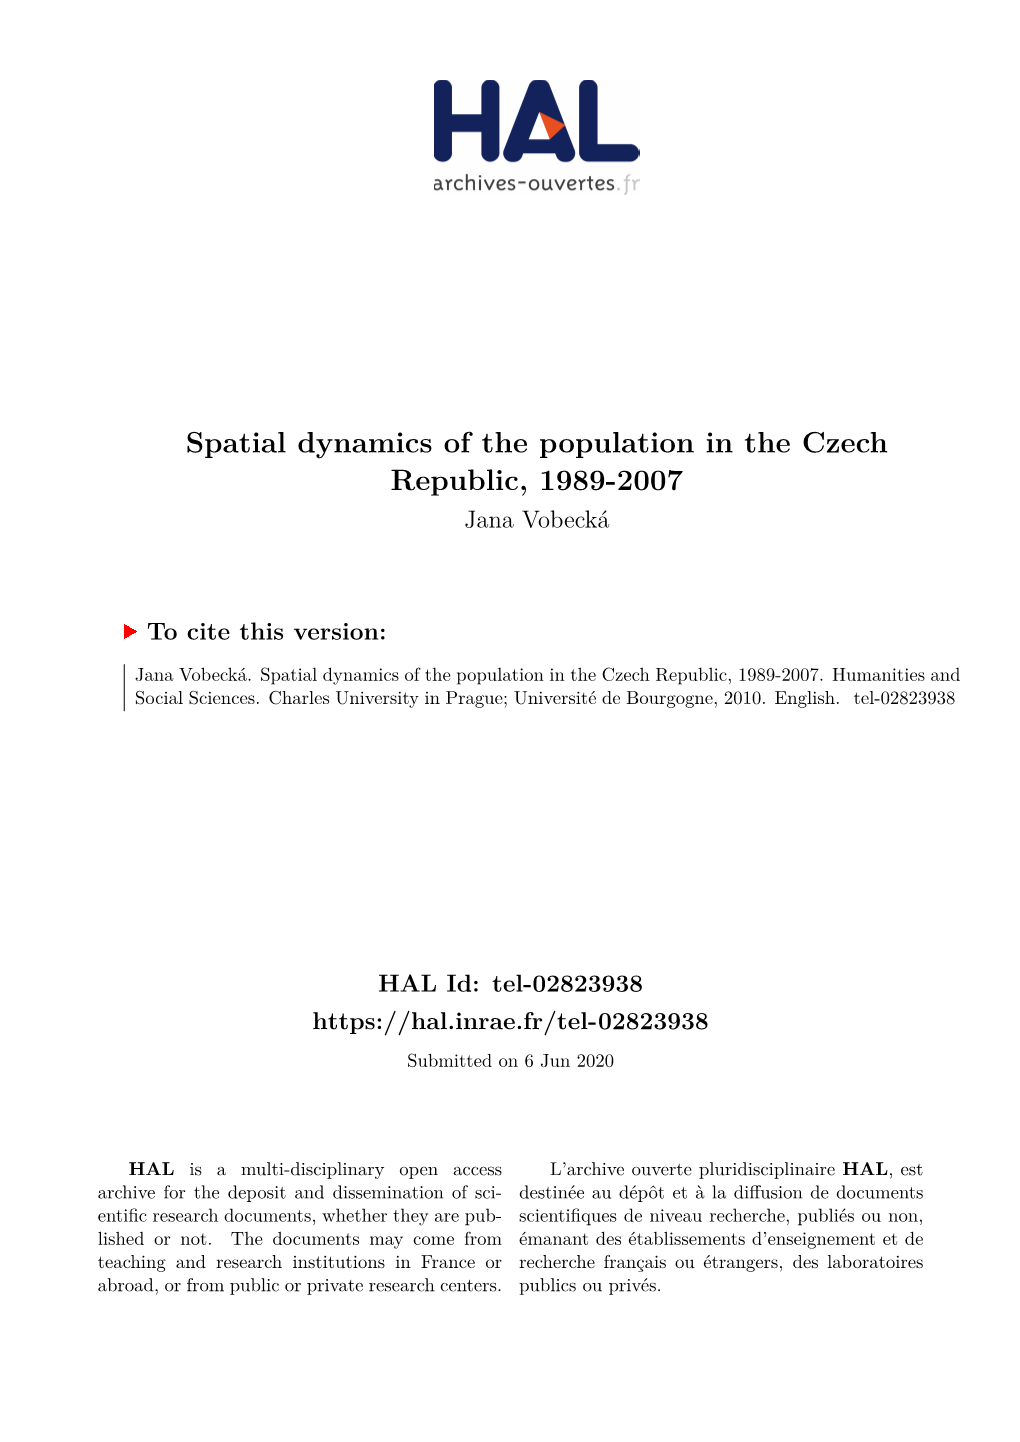 Spatial Dynamics of the Population in the Czech Republic, 1989-2007 Jana Vobecká